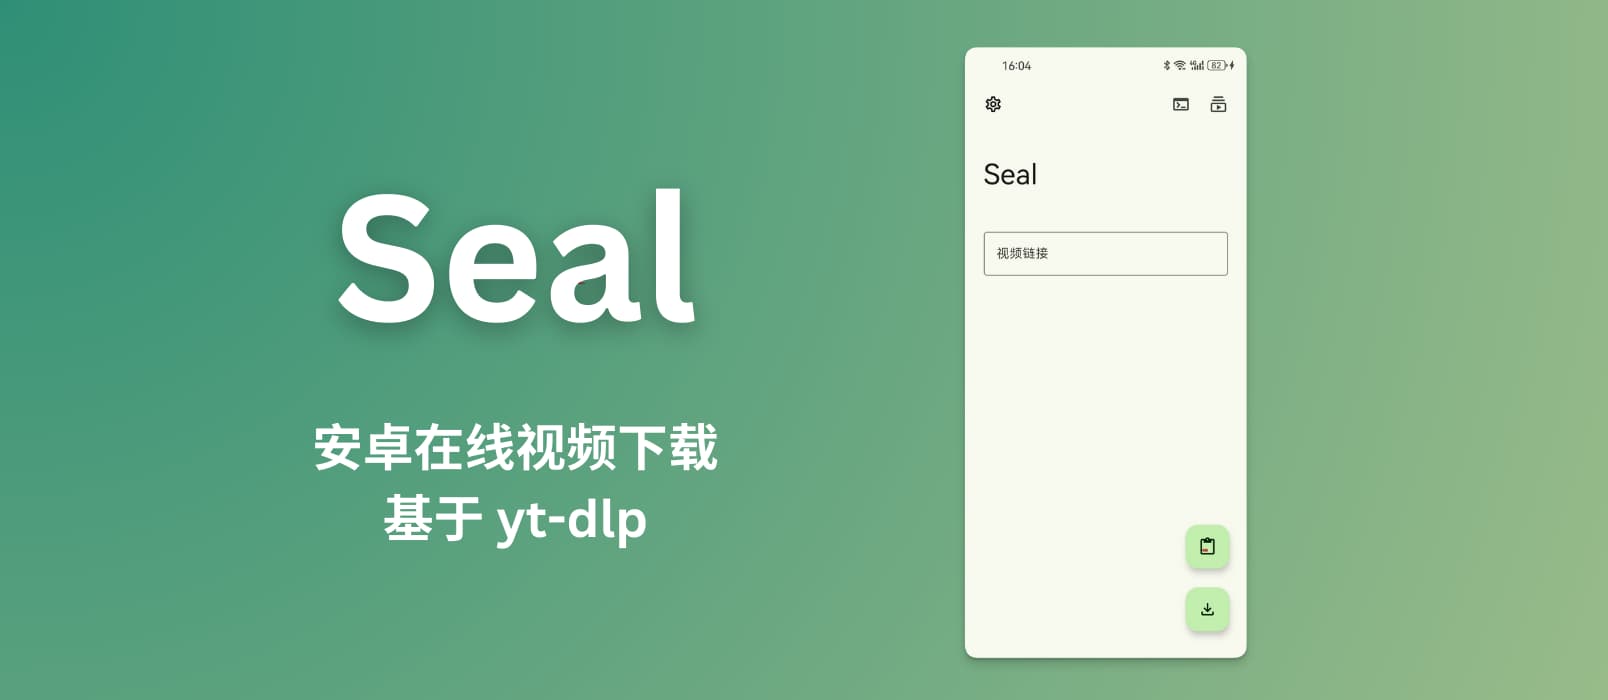 Seal - 基于 yt-dlp 的安卓在线视频下载应用，支持数千在线视频平台